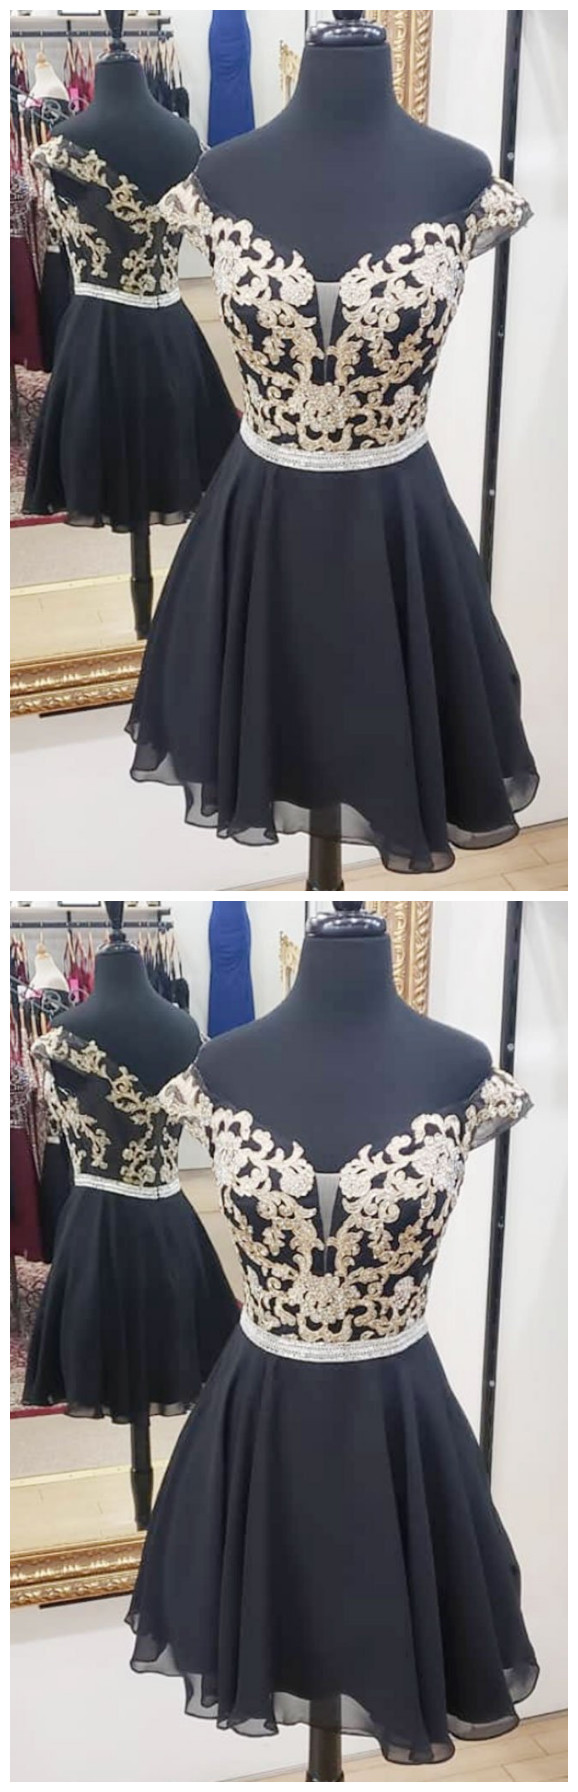 Black Chiffon Lace Short Prom Dress, Black Homecoming Dress